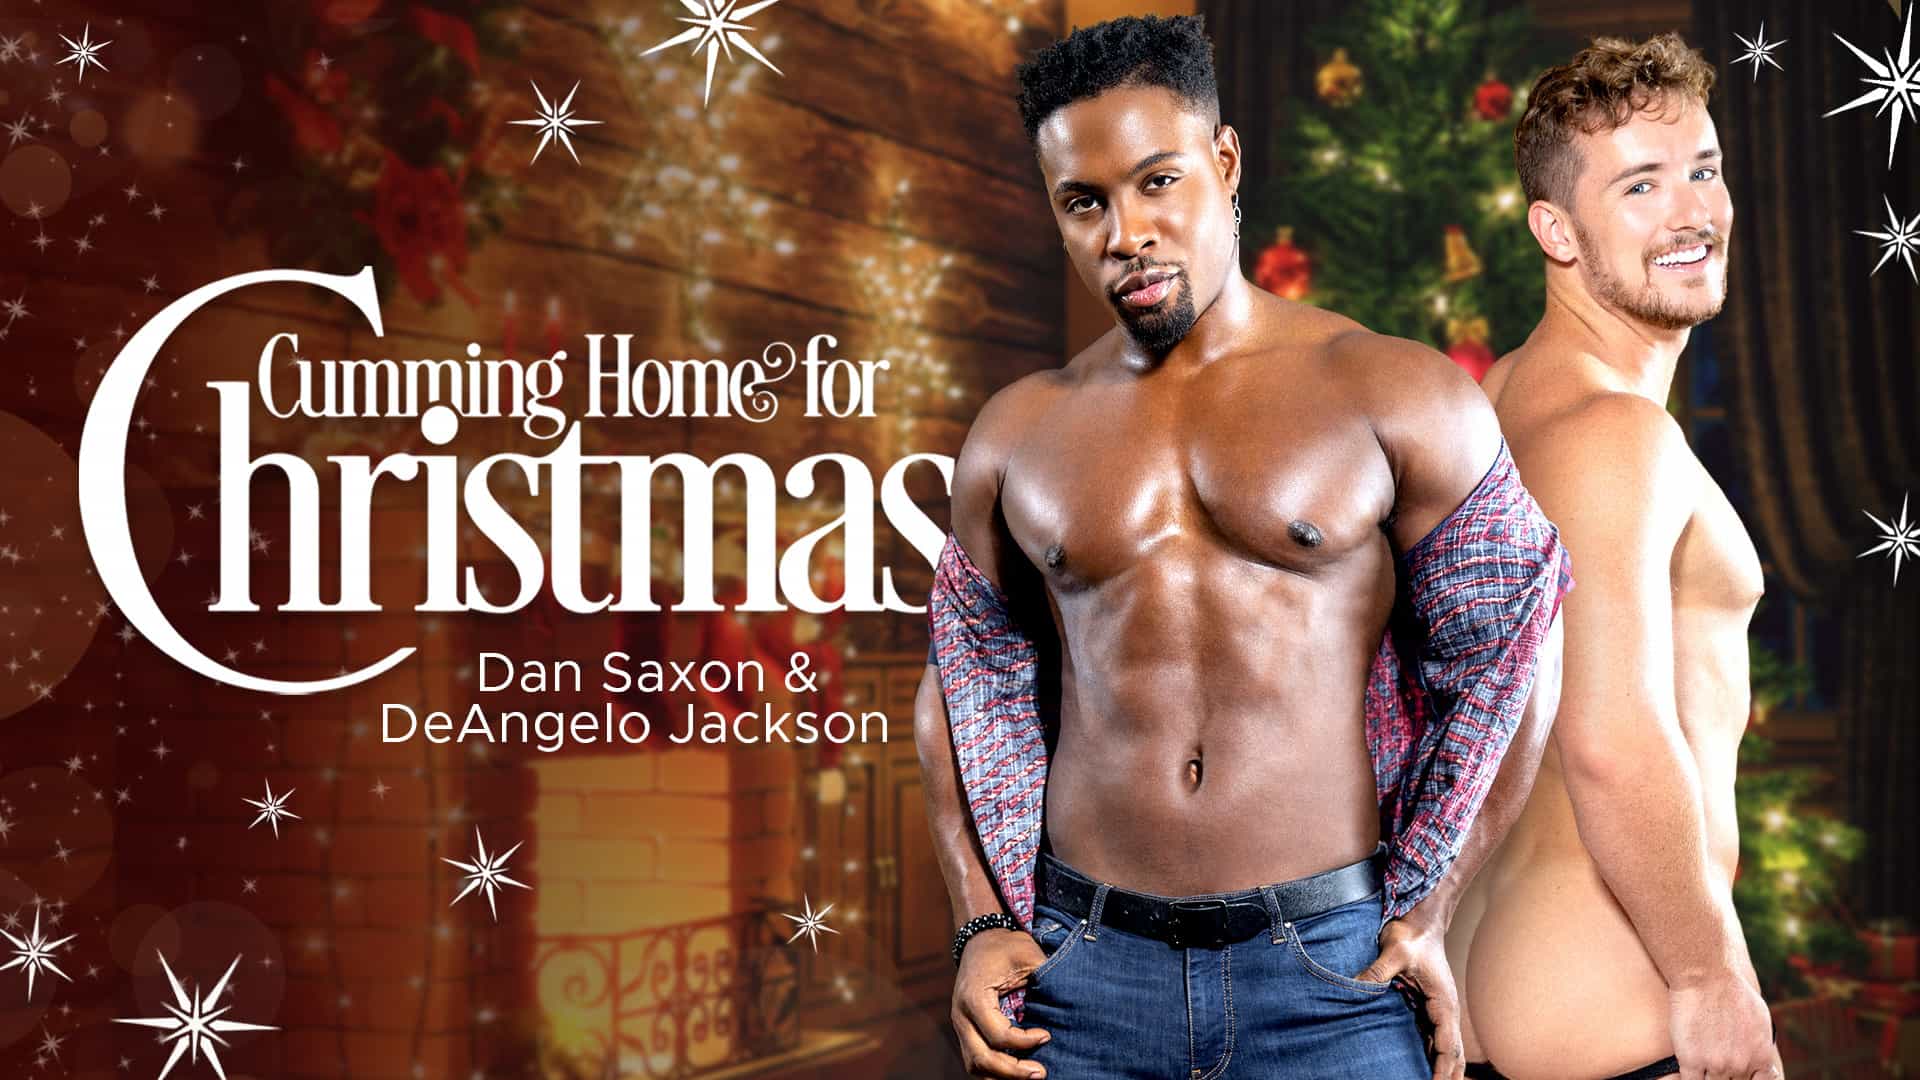 Cumming Home for Christmas, Scene 5 – Dan Saxon and DeAngelo Jackson